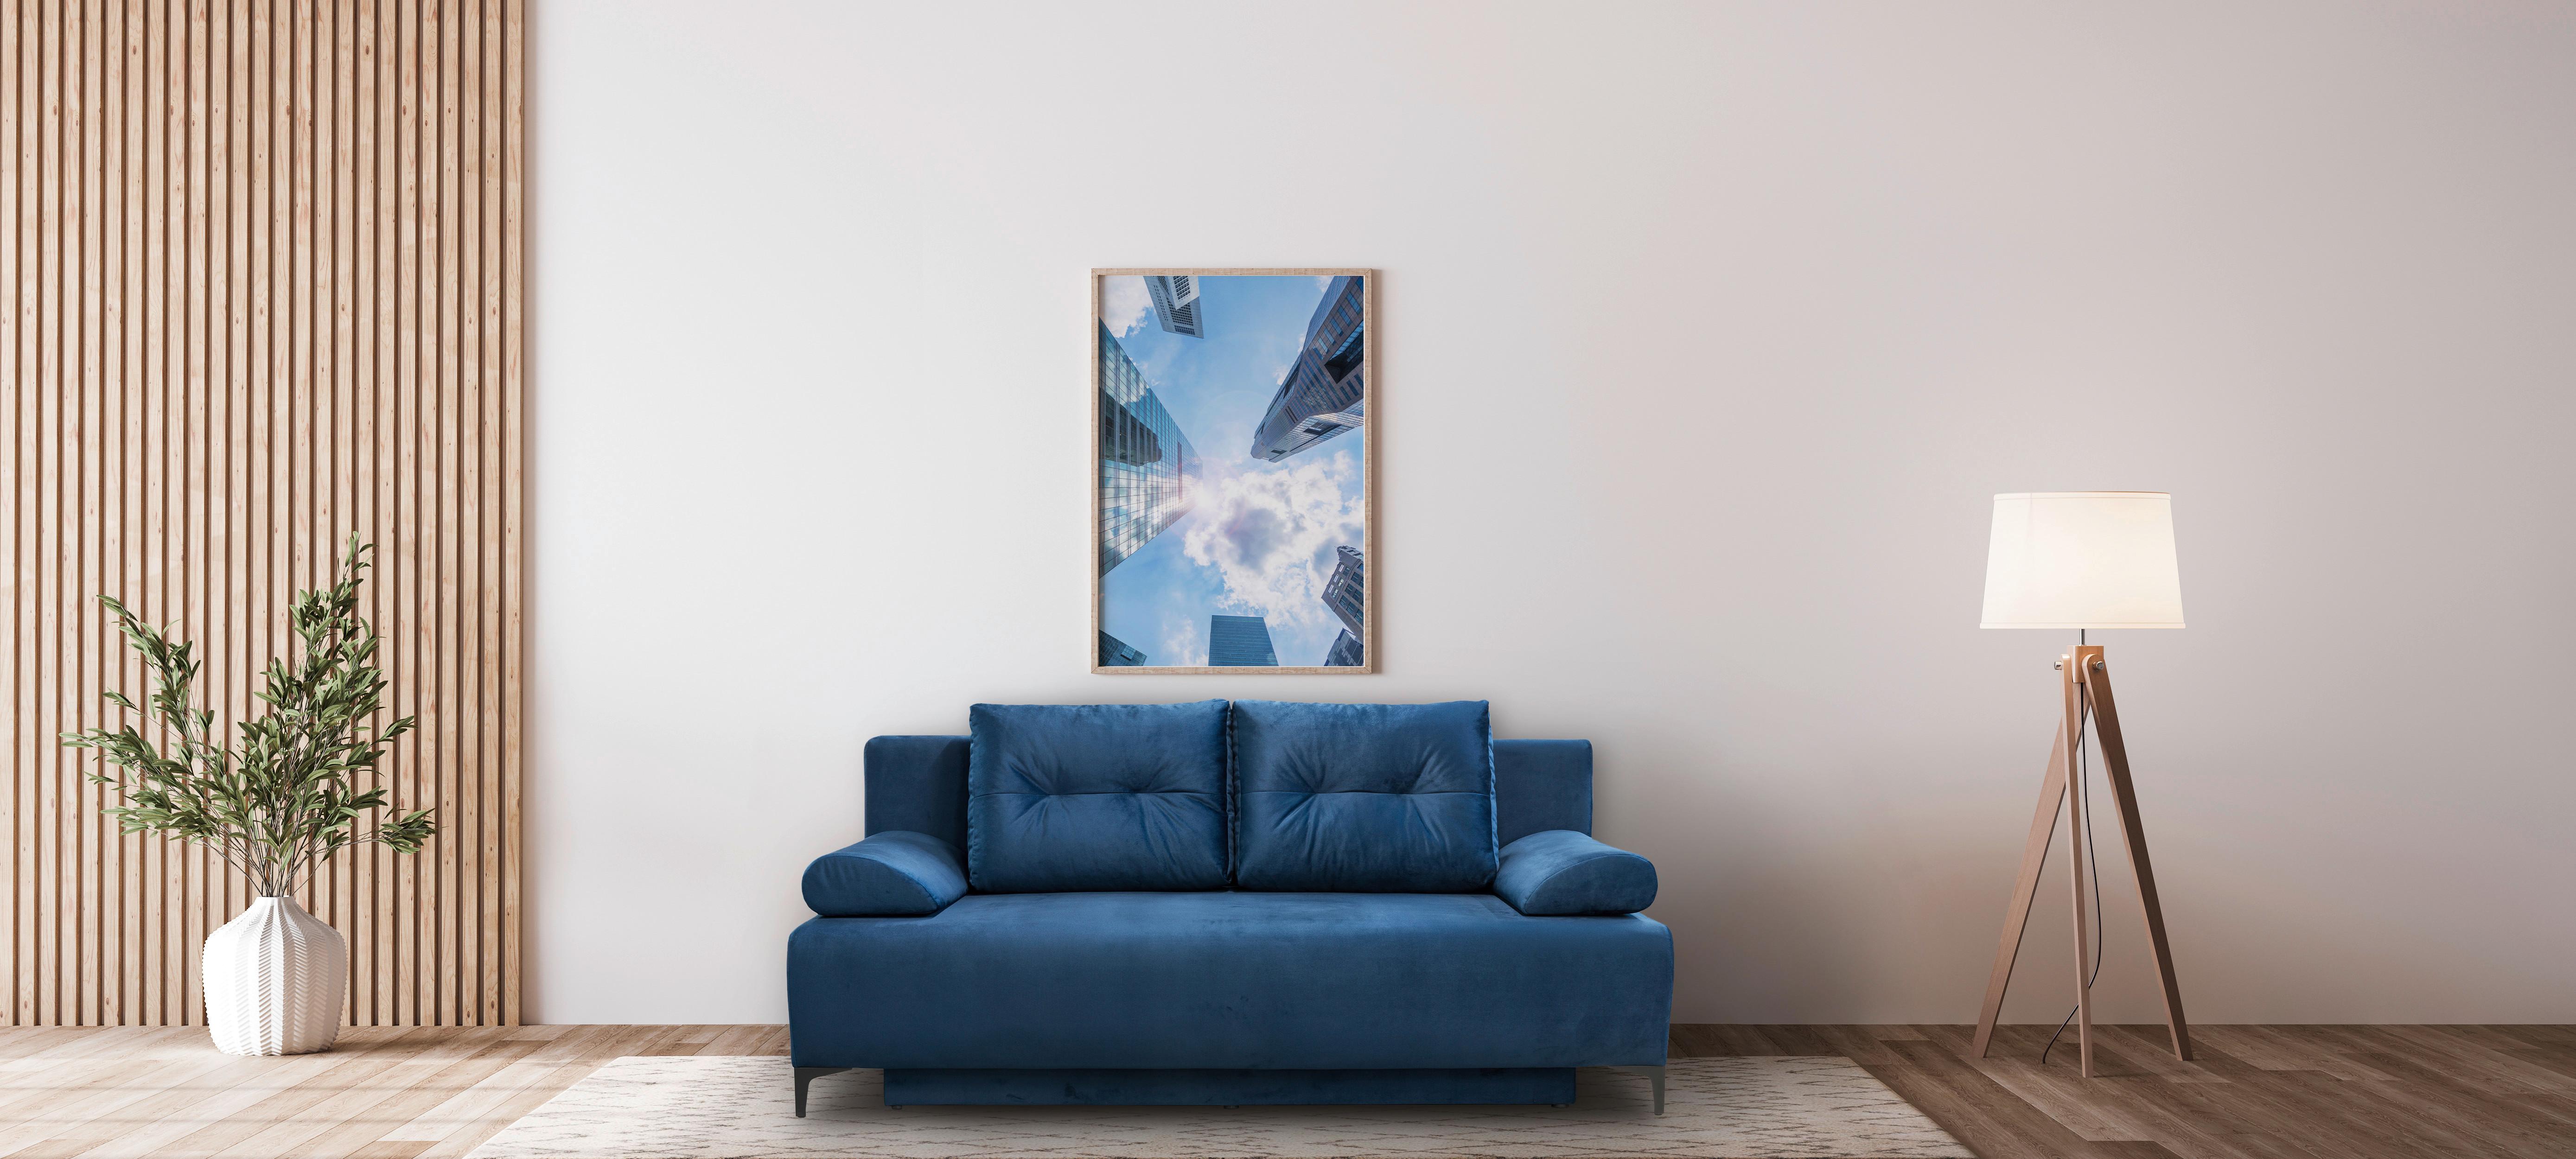 Sofa Viera - tamno plava/crna, Modern, tekstil/drvo (201/100/105cm) - Modern Living